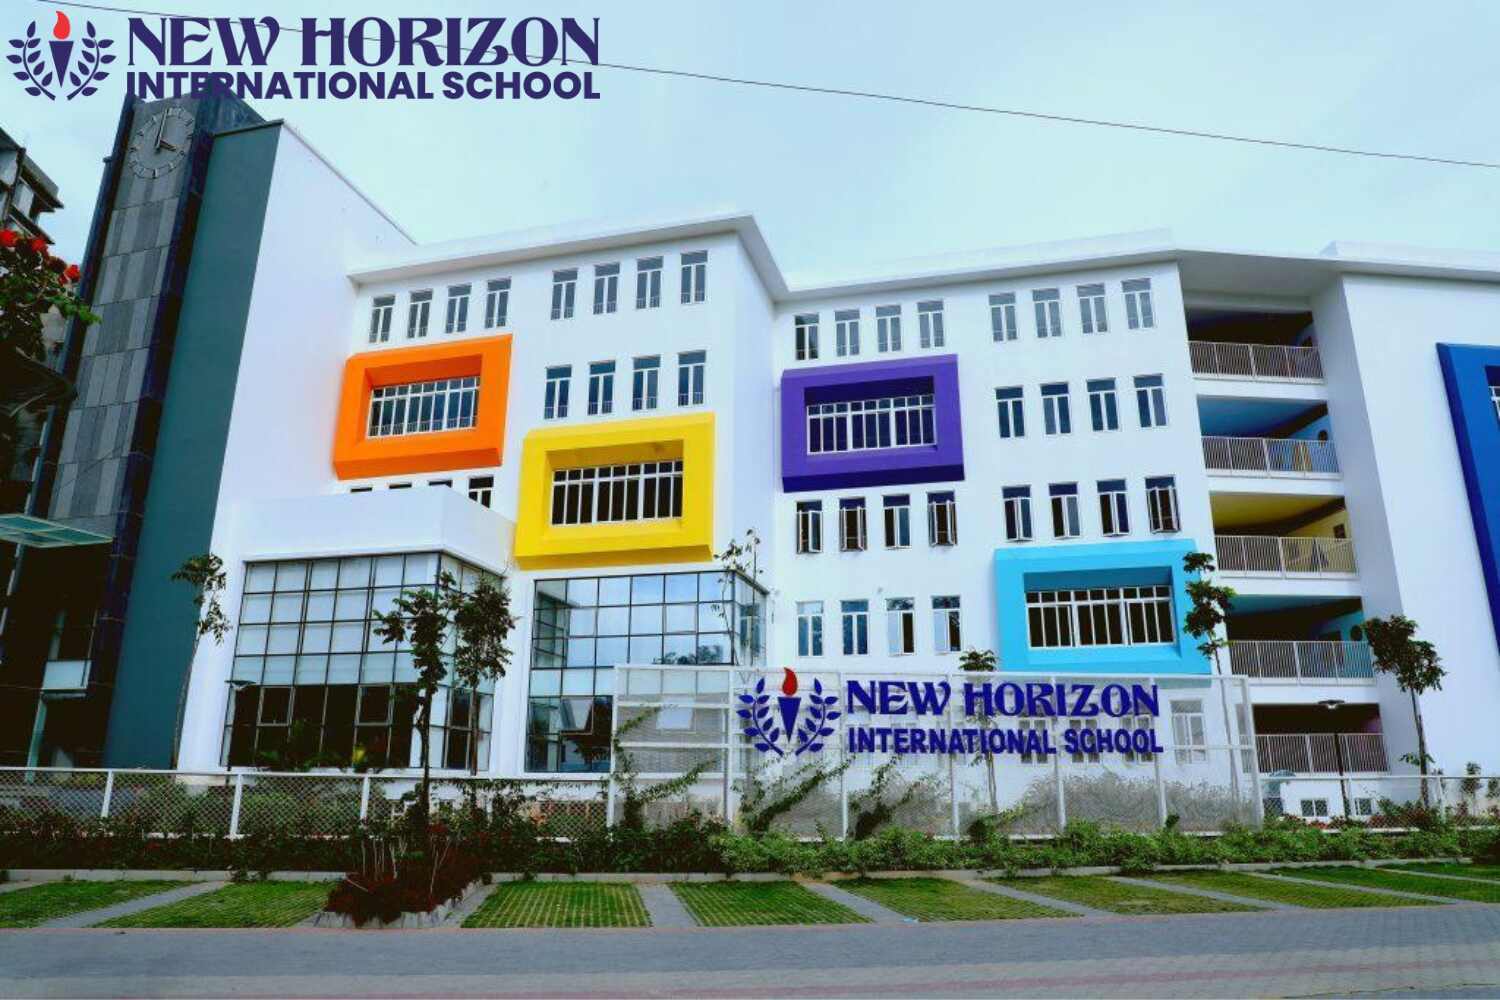 New horizon international school